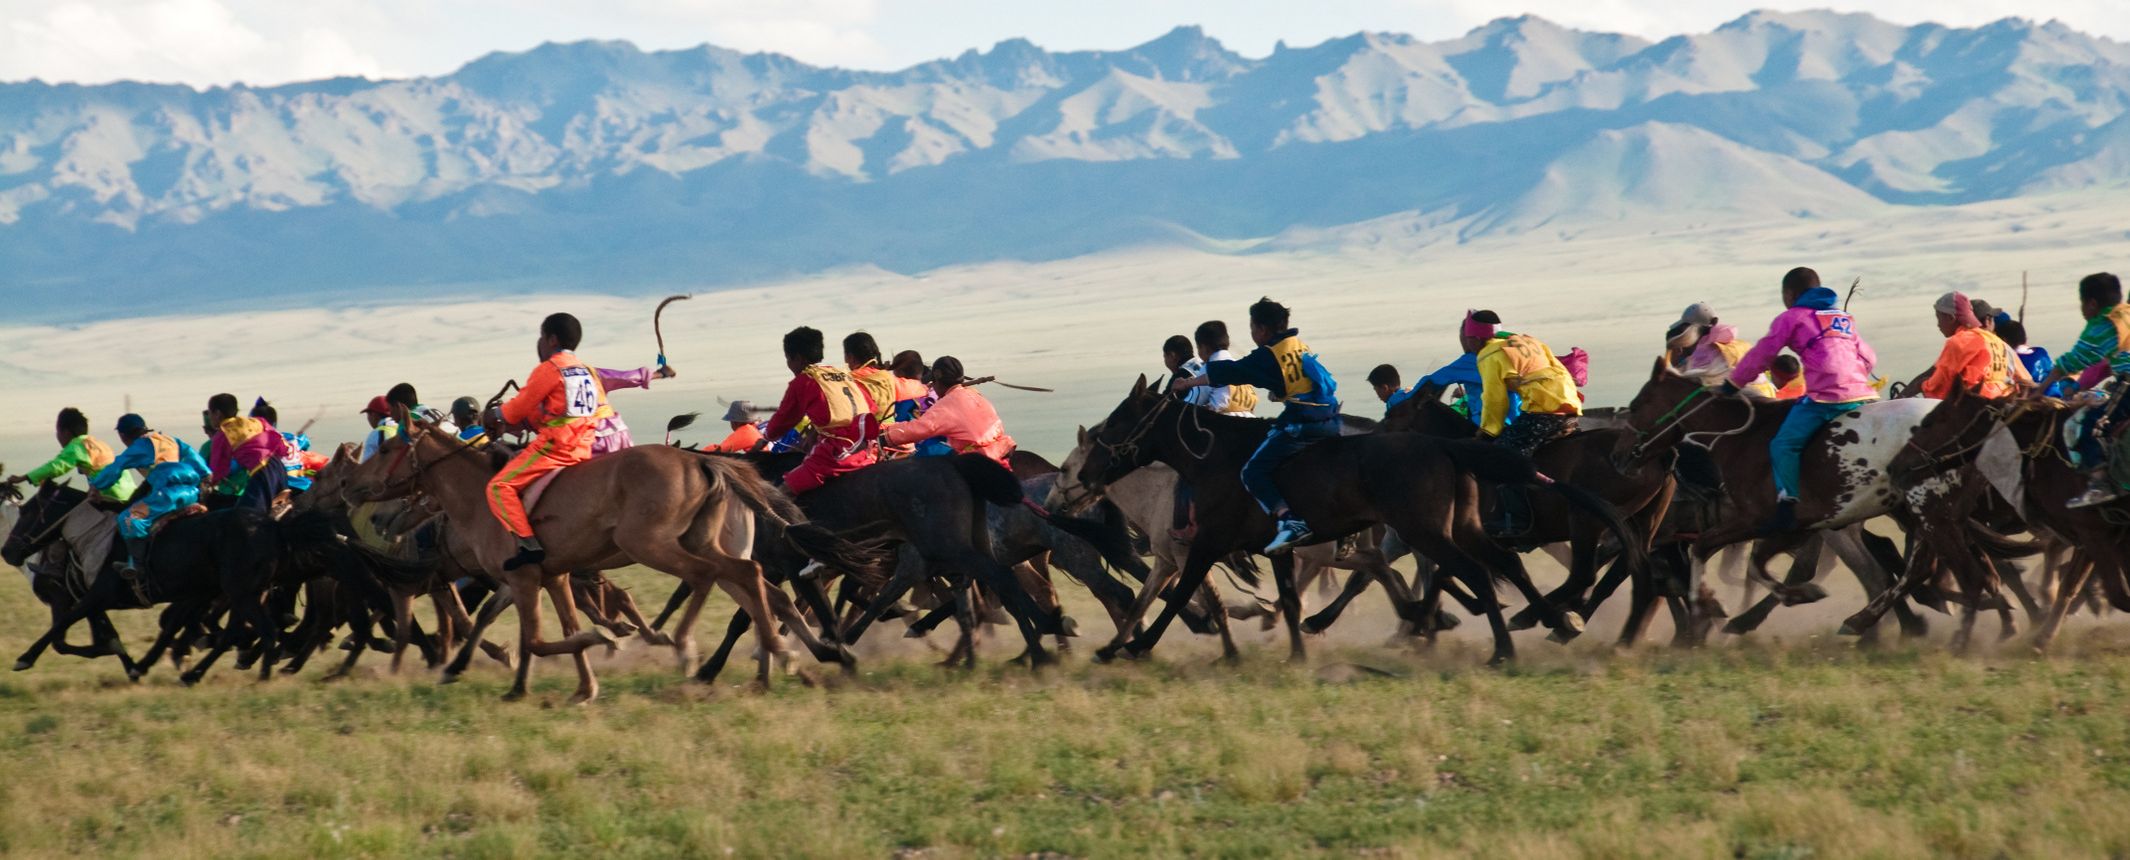 Mongolia -  Festival de Naadam, Gobi y Lago Khovsgol - Salida 09 de Julio desde Madrid